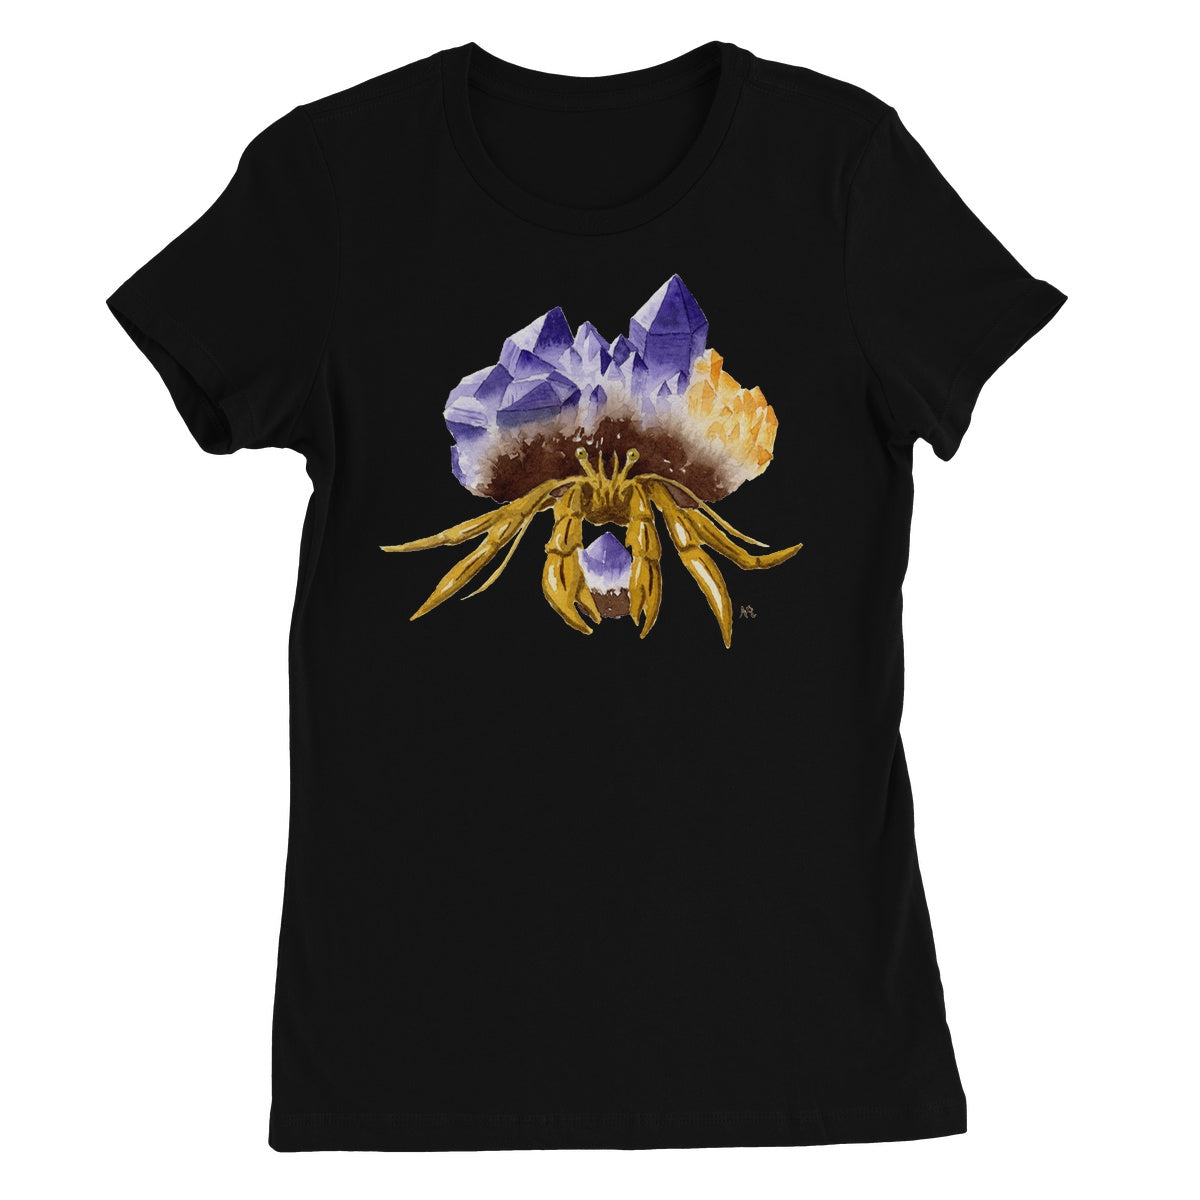 Ametrine Crab Women's T-Shirt